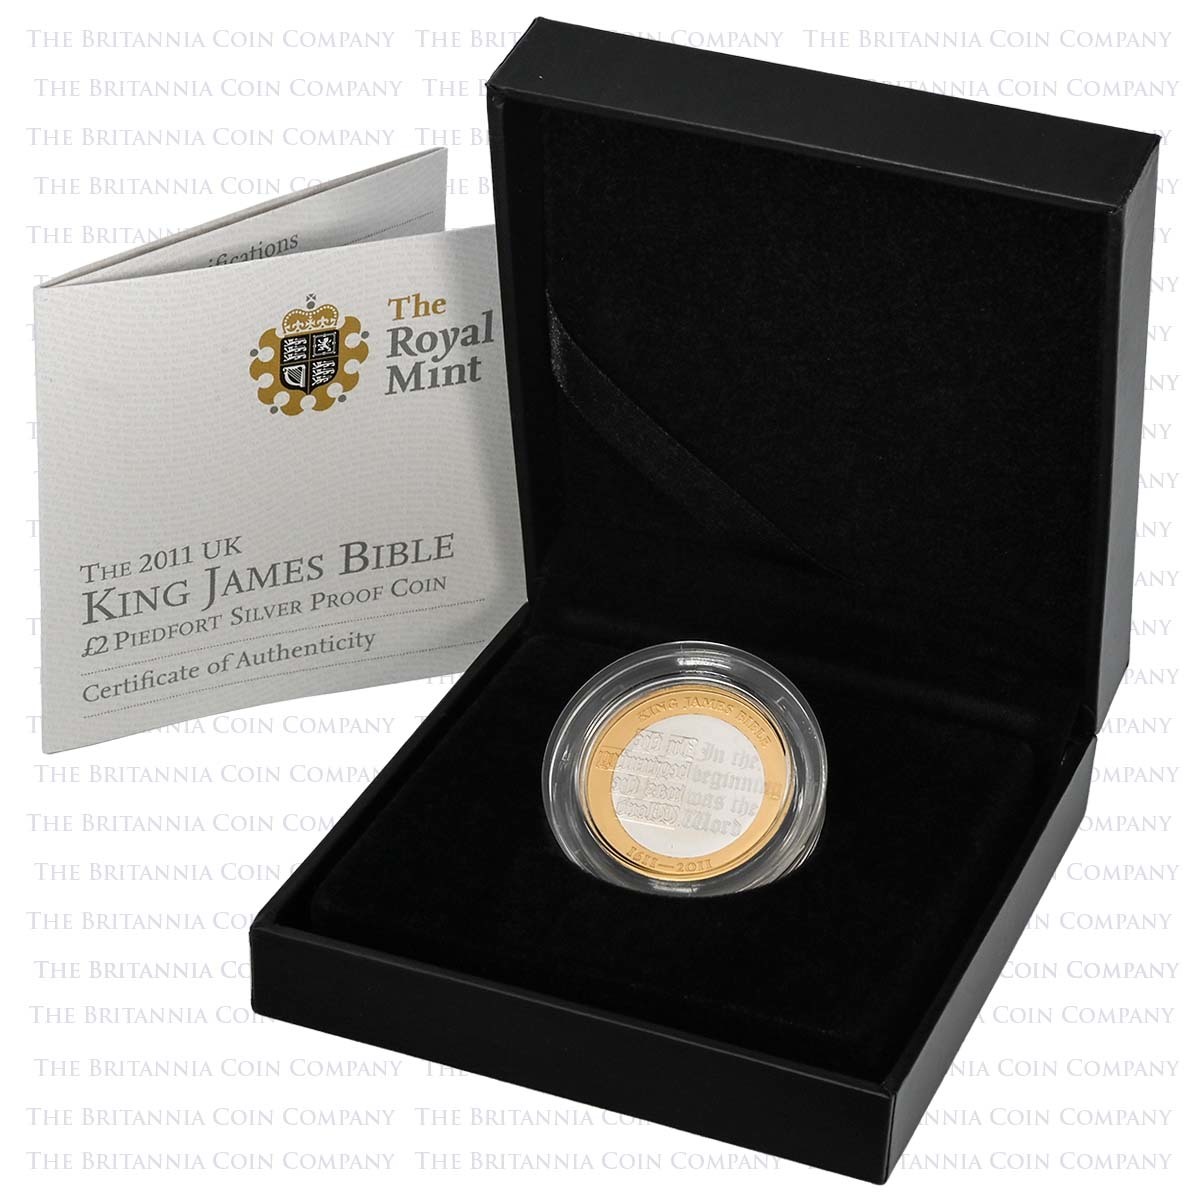 UKKBPF 2011 King James Bible £2 Piedfort Silver Proof Boxed